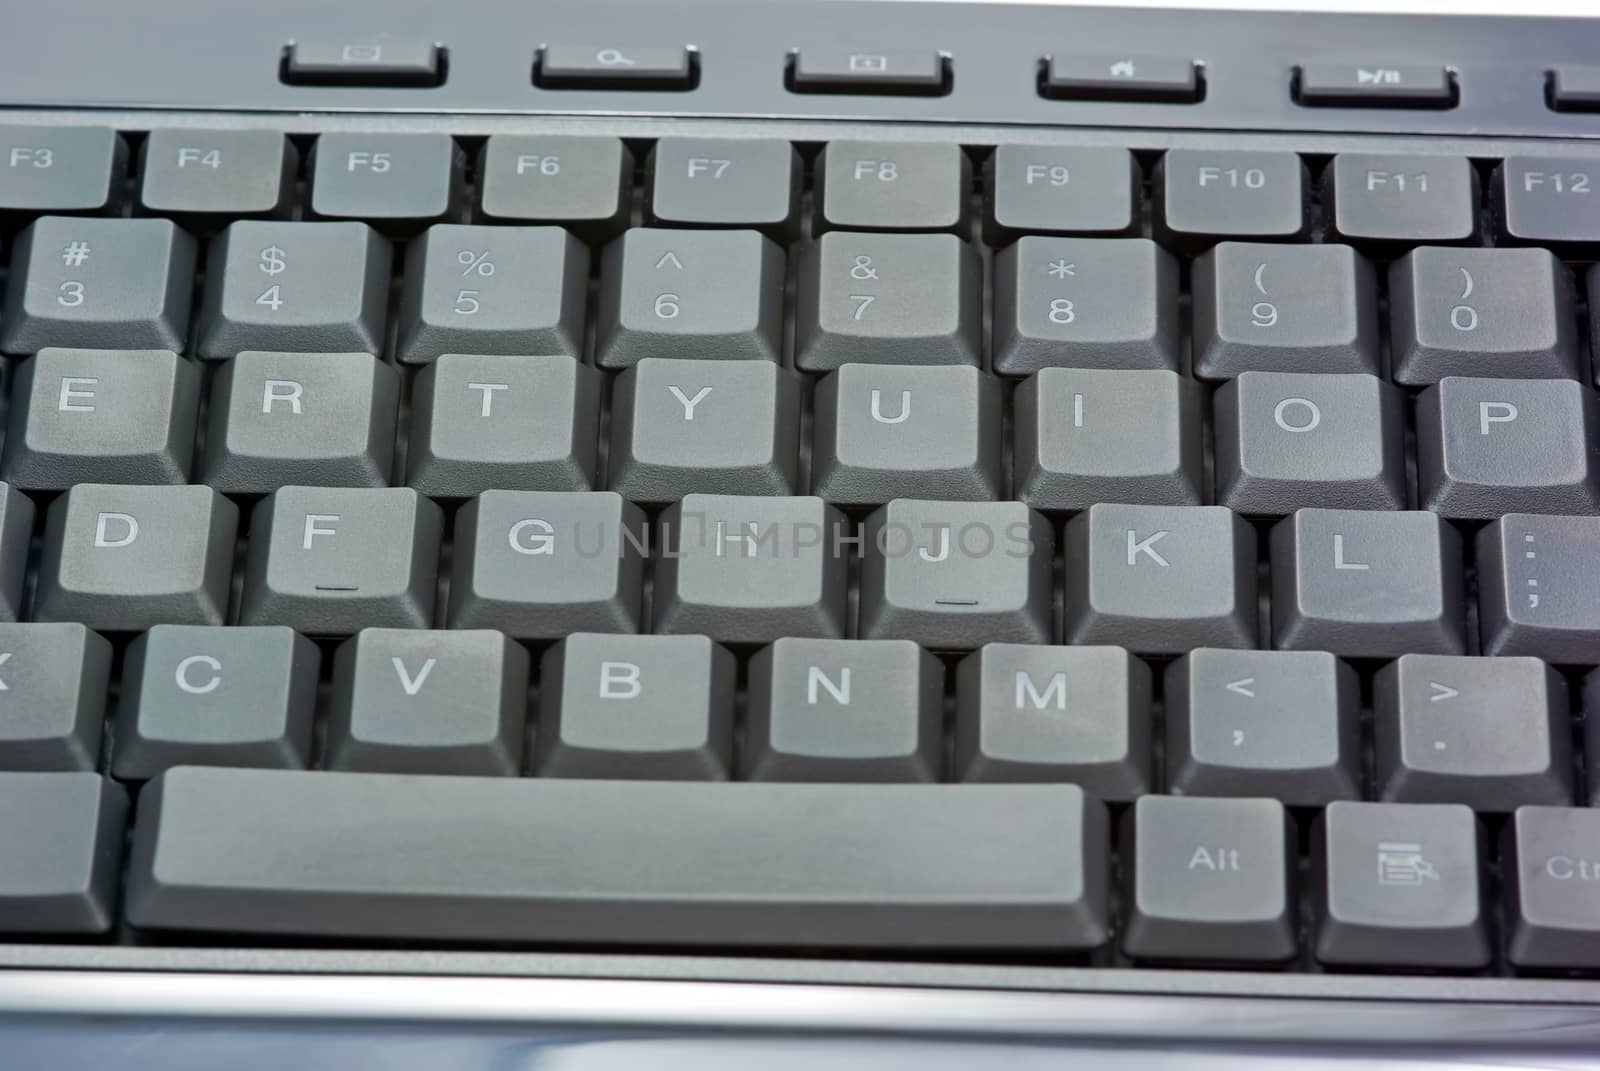 Close up image of a black keyboard